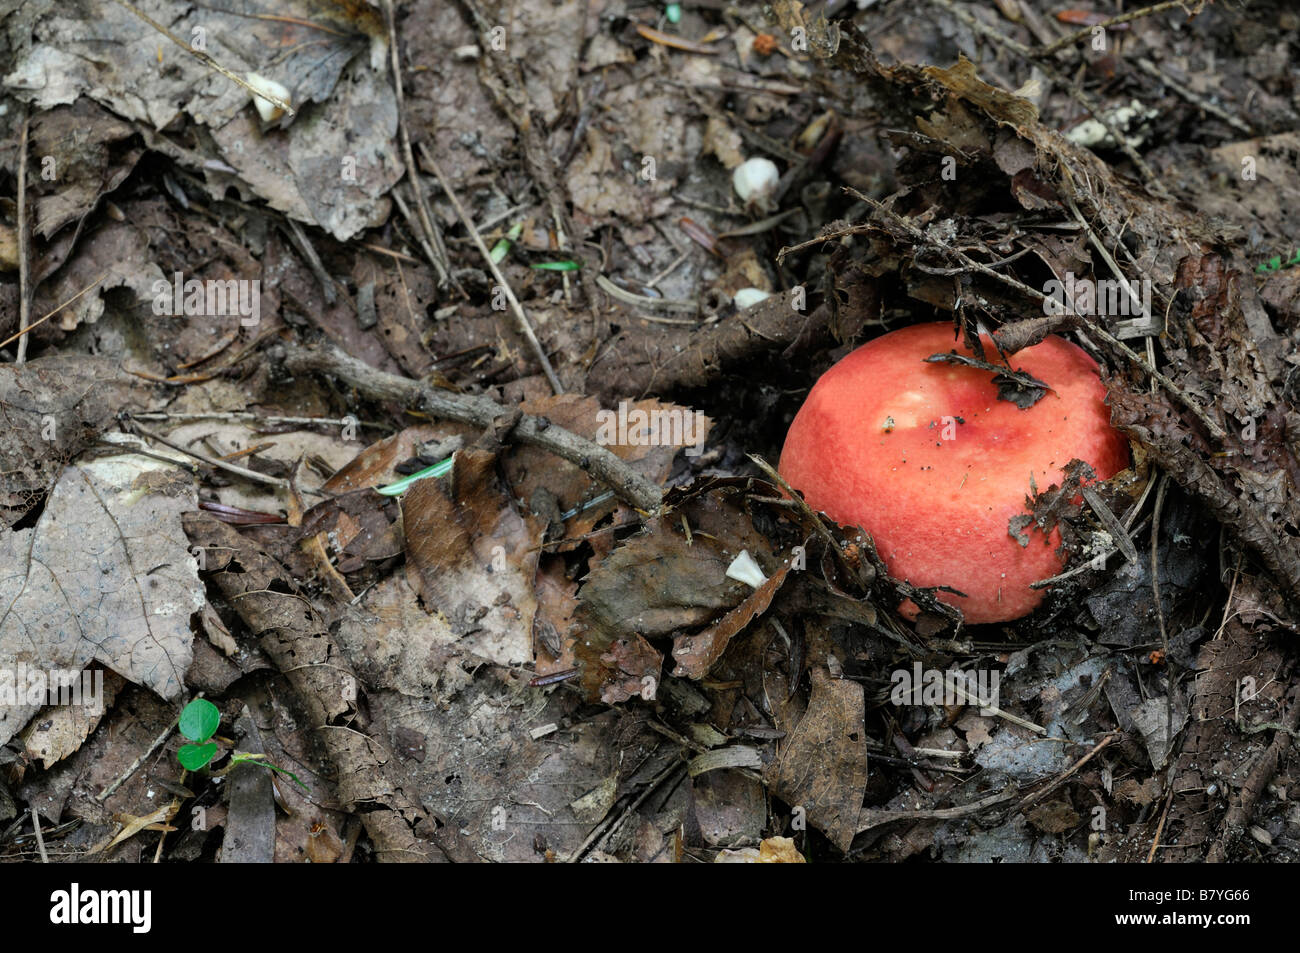 single orange boletus edible mushroom fruiting body emerge appear emerging from leaf litter dirt soil forest floor sprout Stock Photo